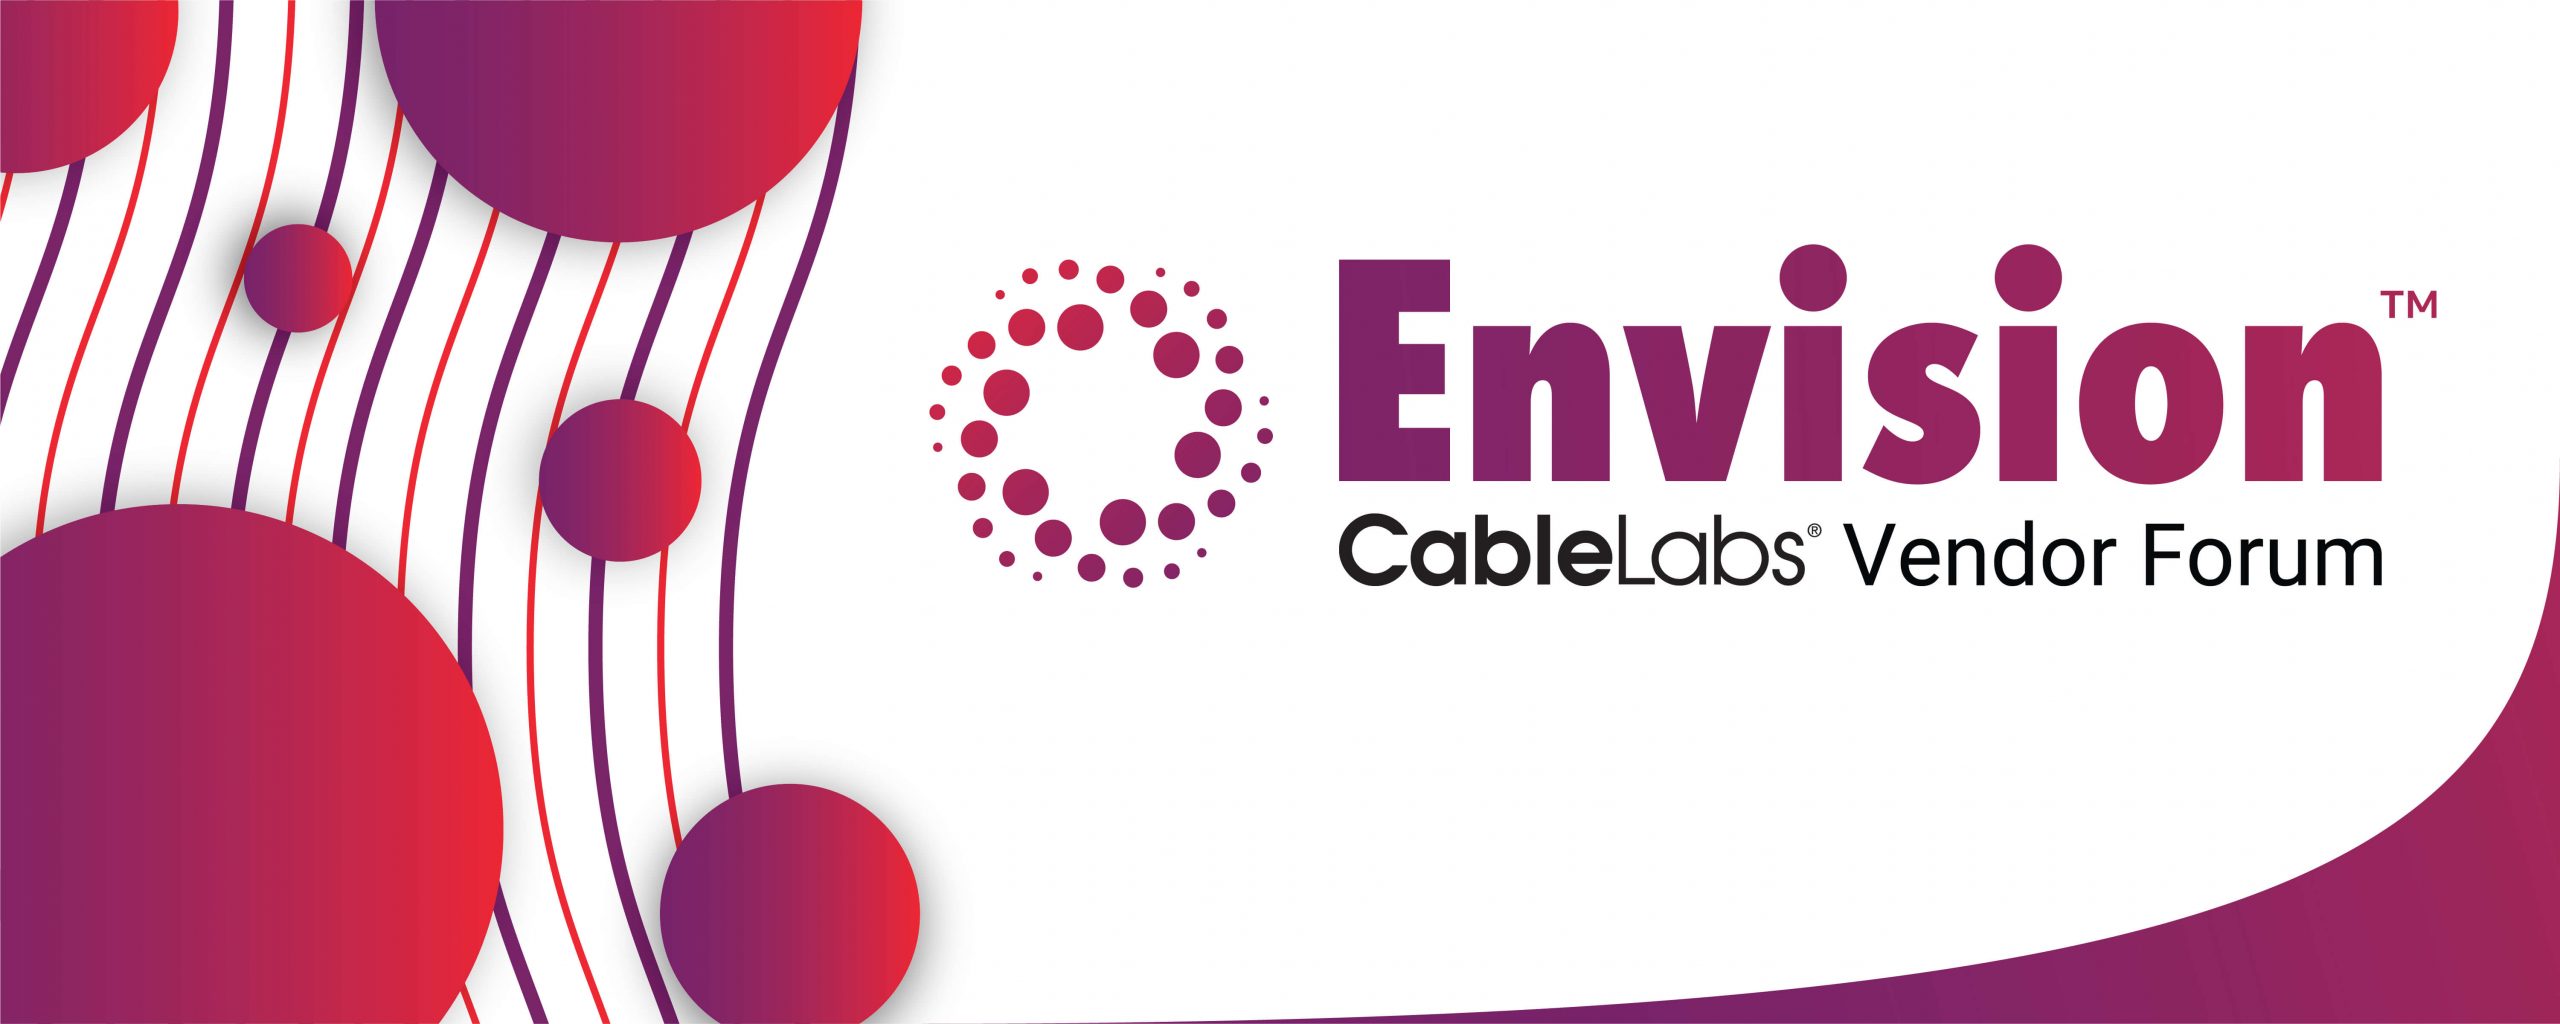 CableLabs Envision Vendor Forum 2019